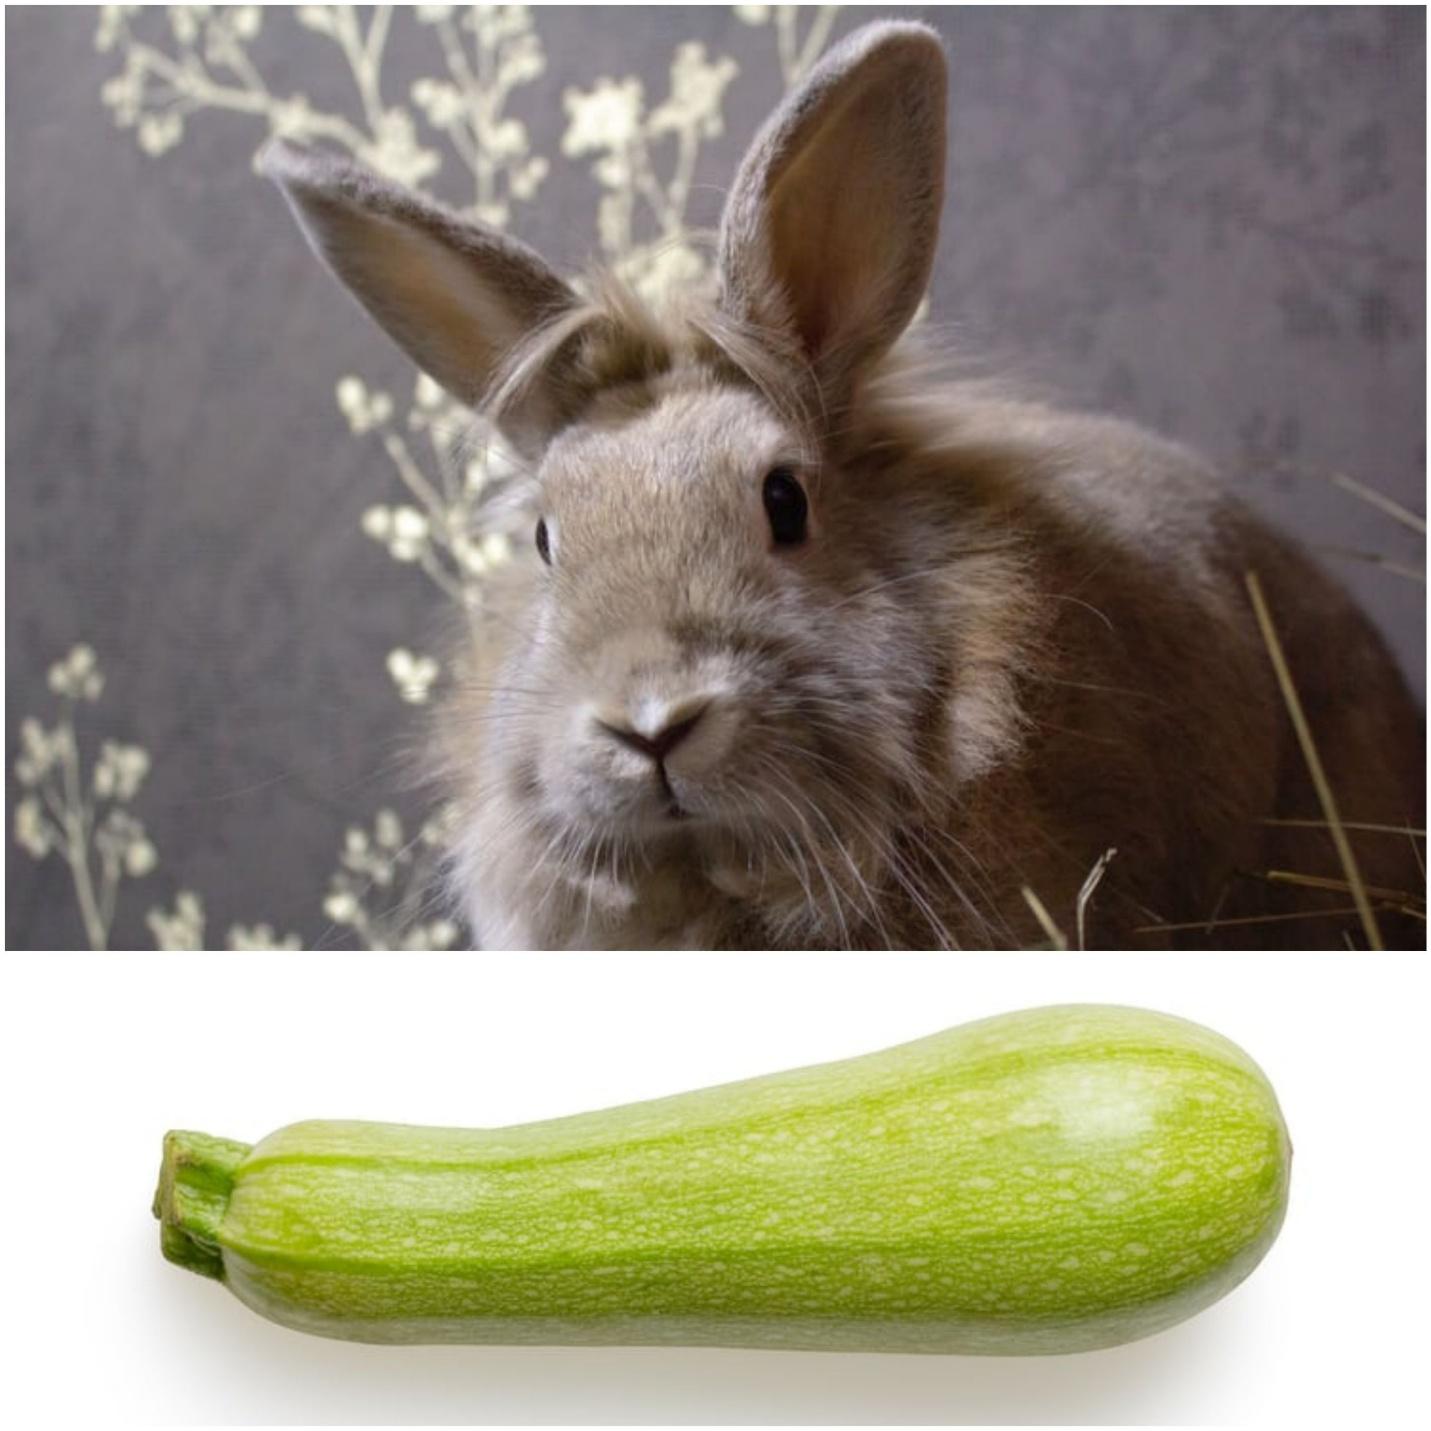 can rabbits eat zucchini